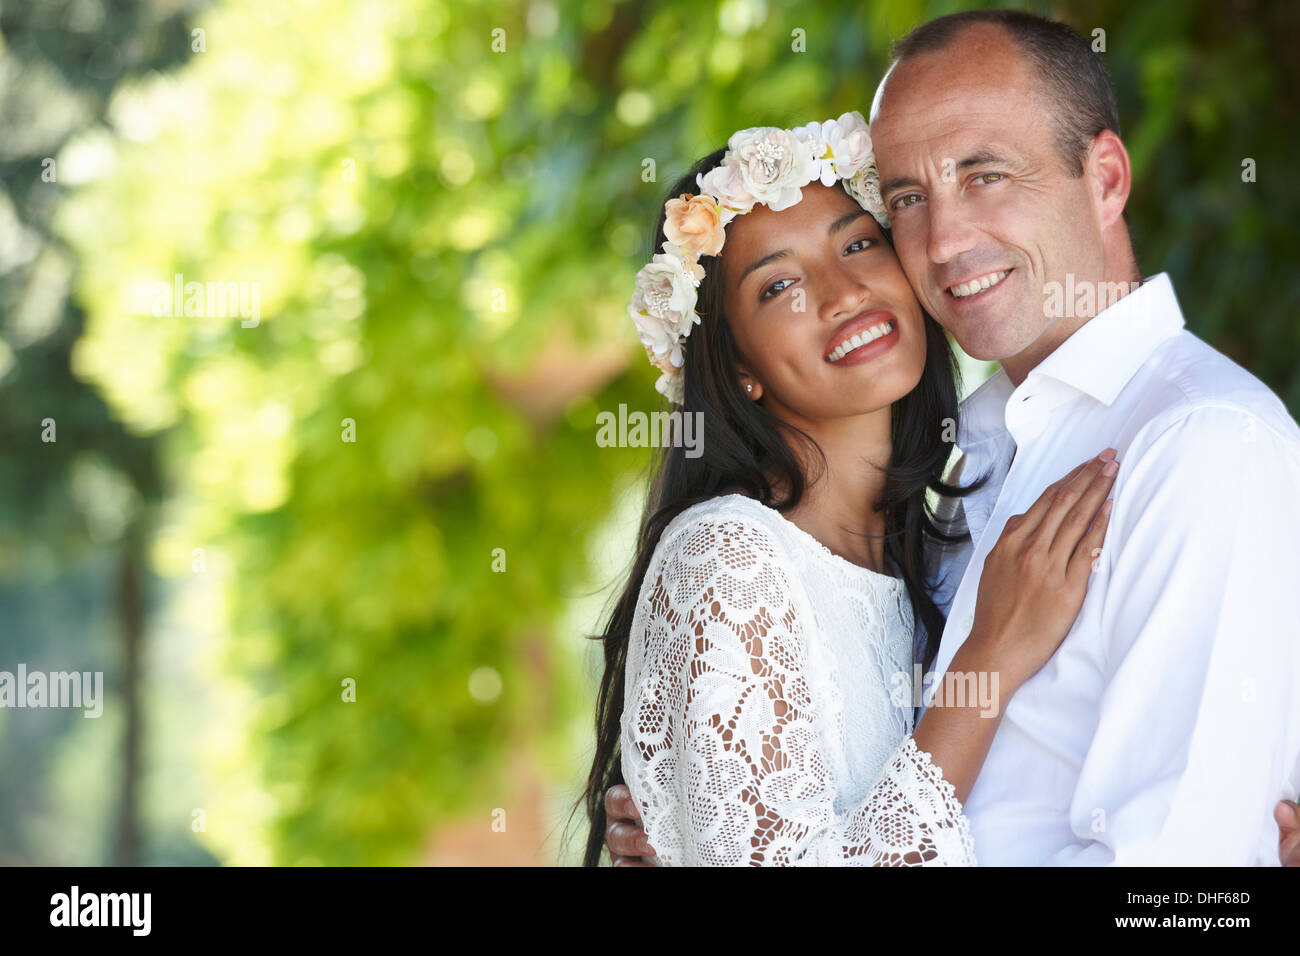 Newlyweds in embrace Stock Photo